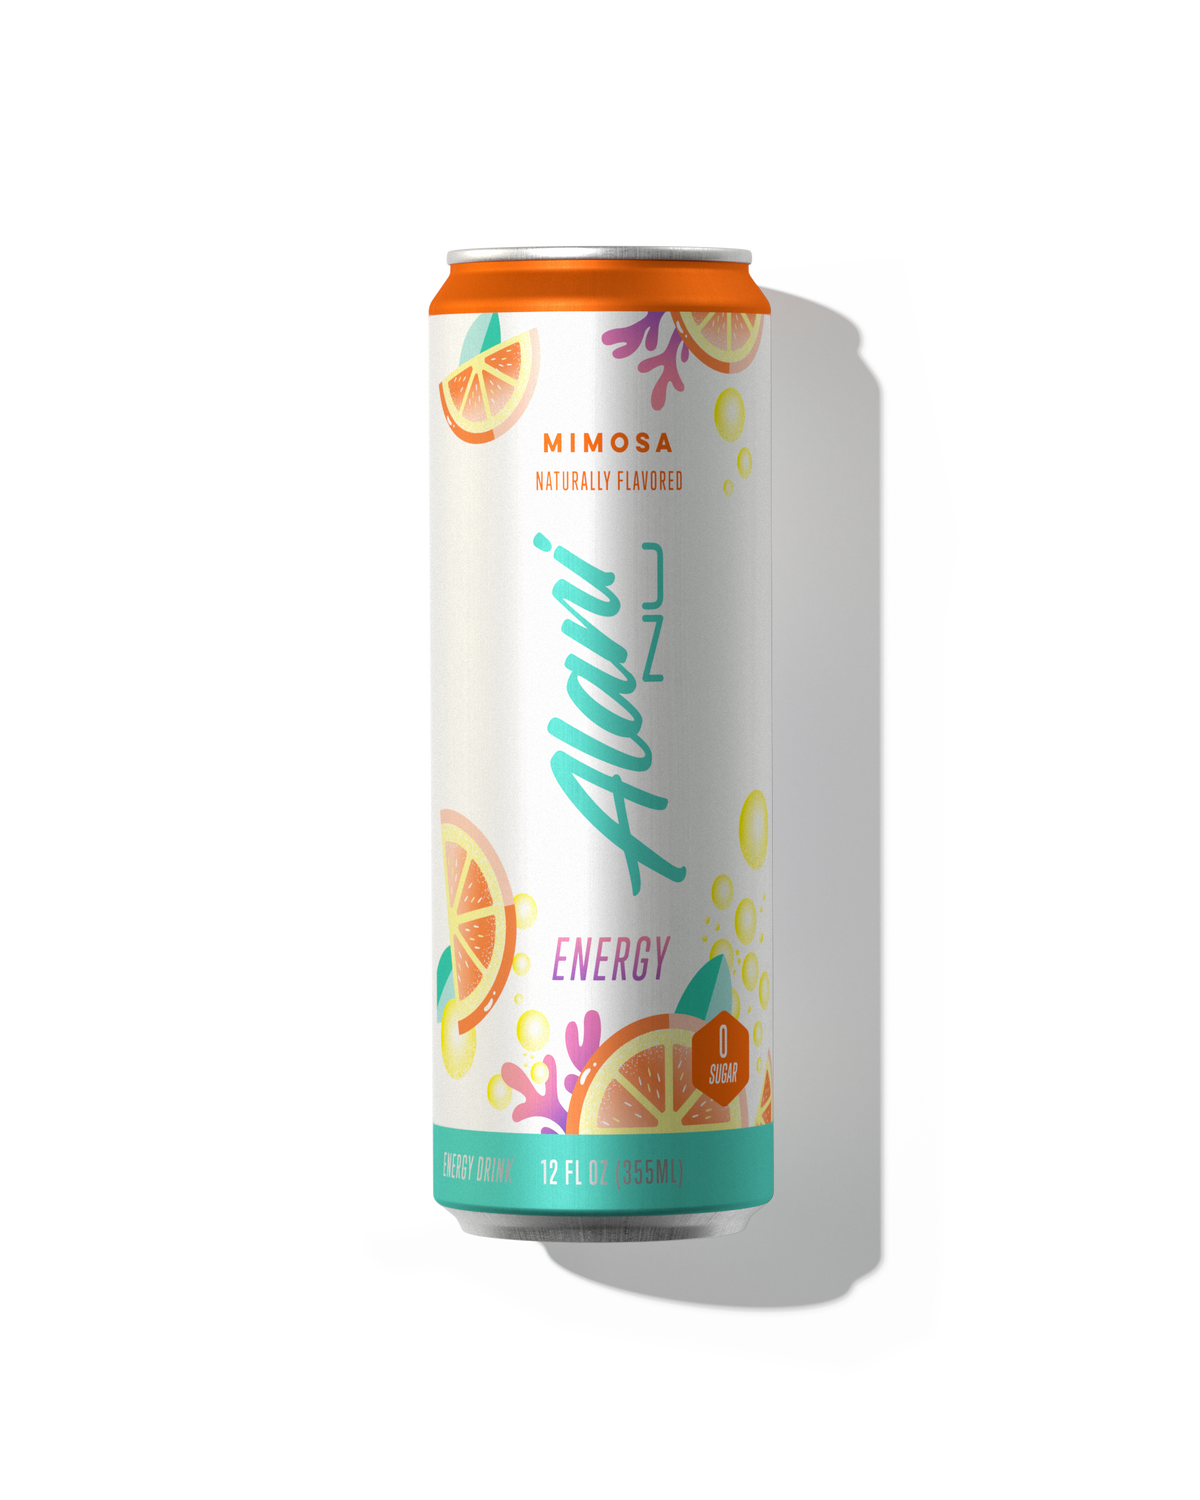 A 12 fl oz Energy Drink in Mimosa flavor.